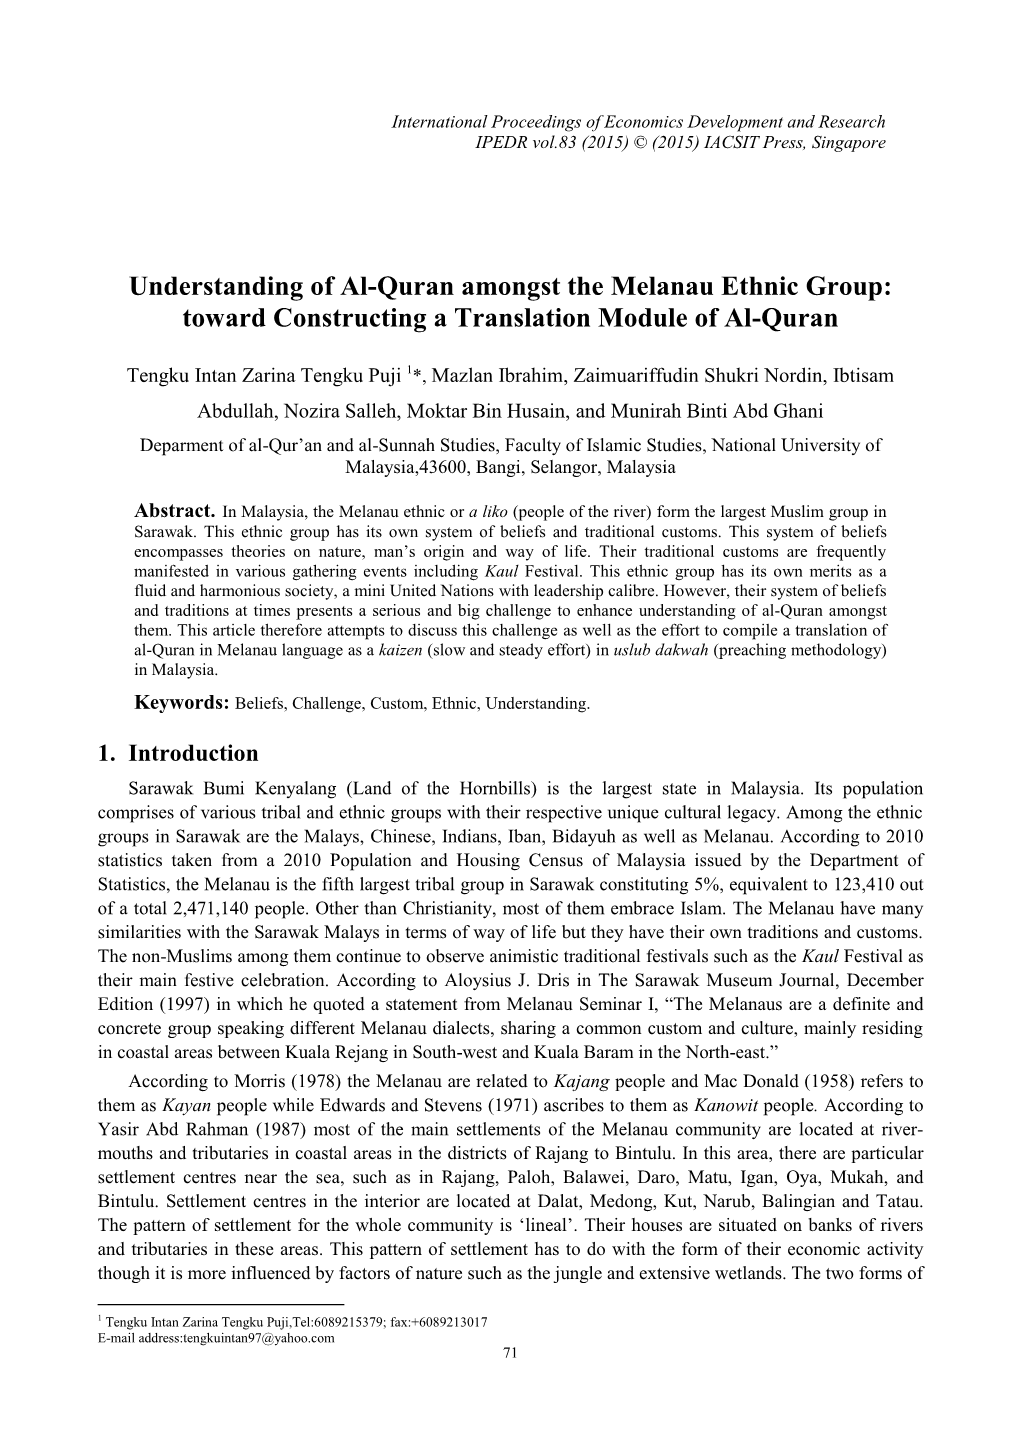 Understanding of Al-Quran Amongst the Melanau Ethnic Group: Toward Constructing a Translation Module of Al-Quran